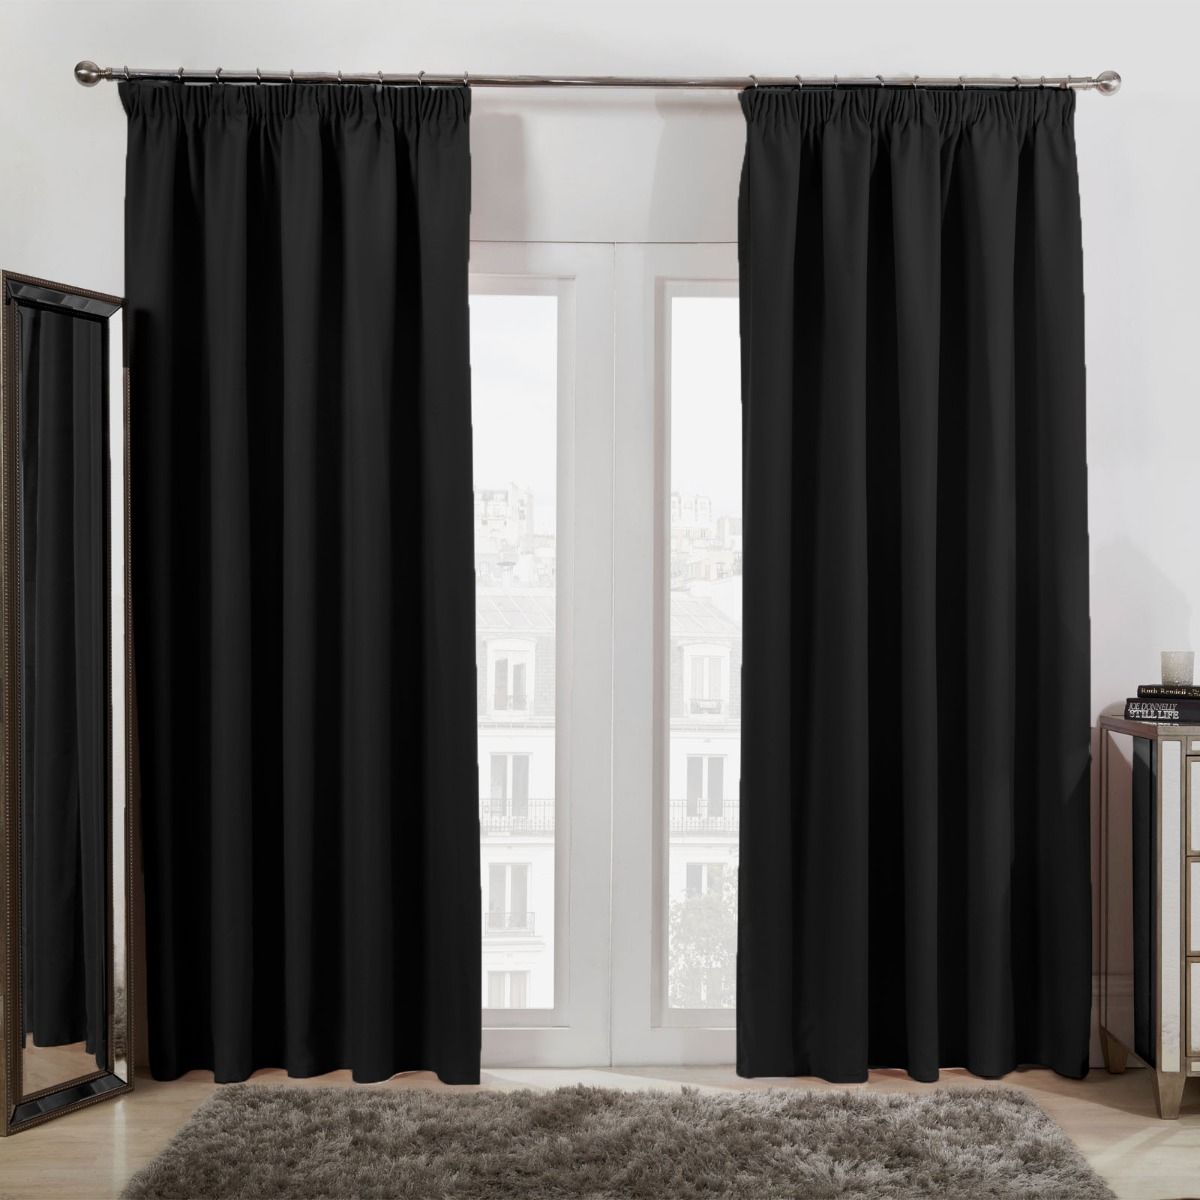 Dreamscene Pencil Pleat 1 Thermal Door Curtain Panel - Black, 66" x 84"